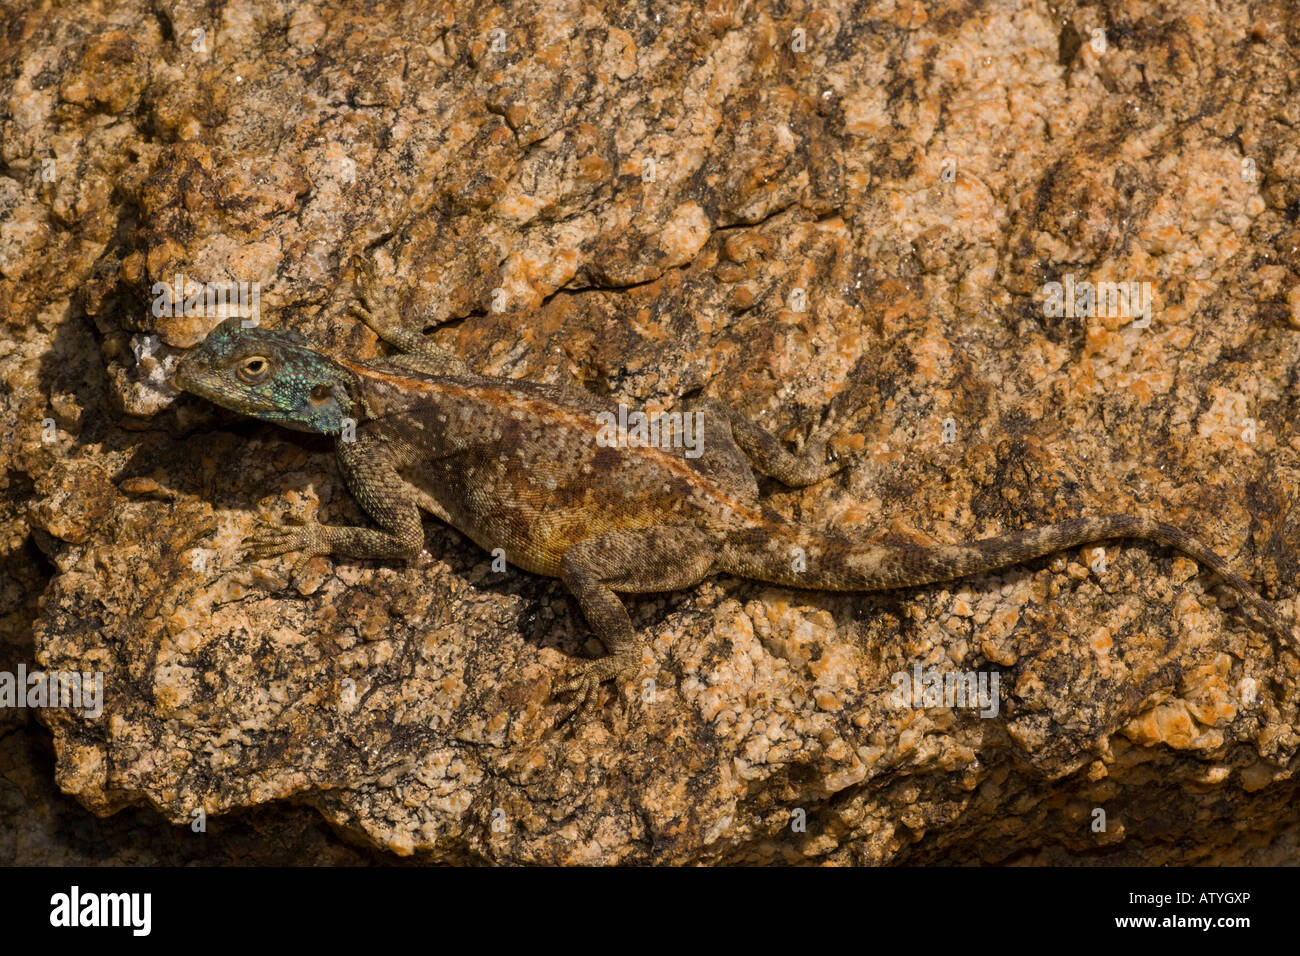 Eine Wüste Agama Eidechse der Southern Rock Agama Agama Atra evolviert Namaqualand in Südafrika Stockfoto